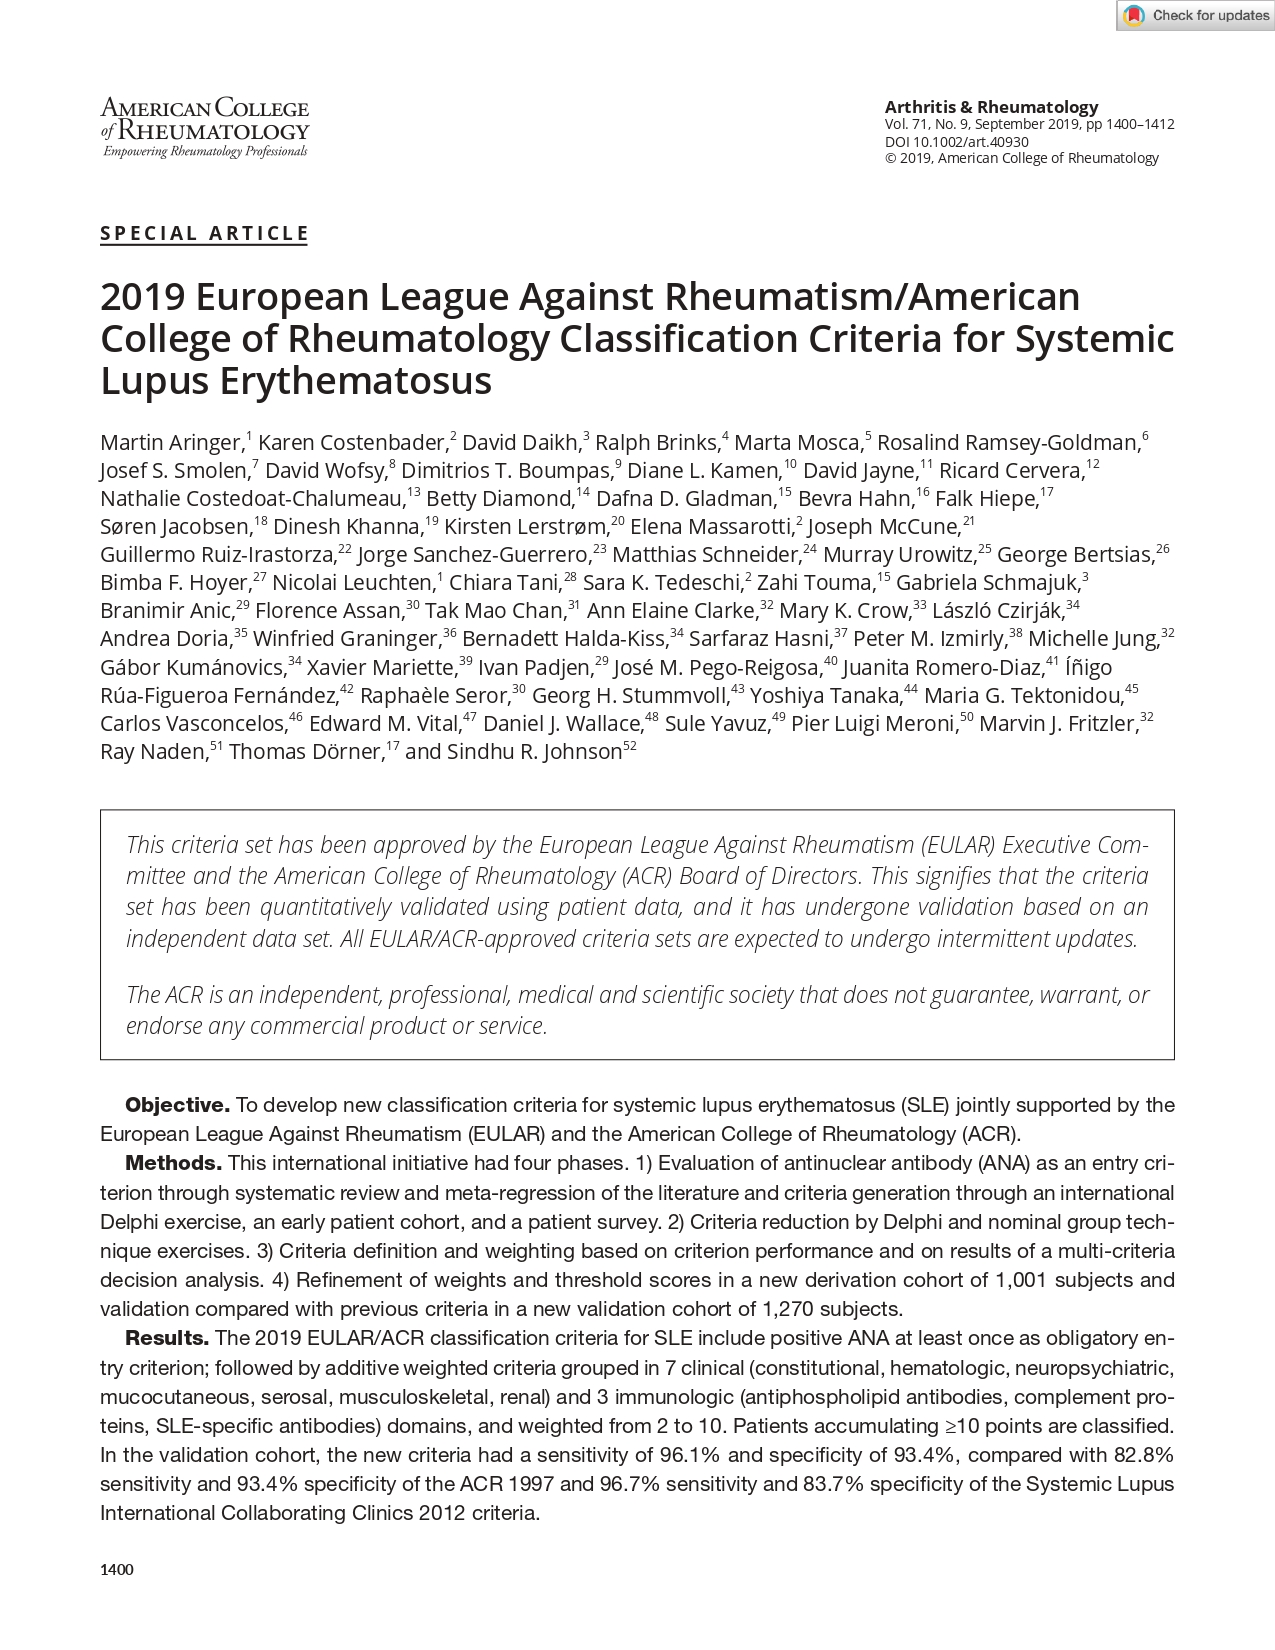 2019 European League Against Rheumatism/American College of Rheumatology classification criteria for systemic lupus erythematosus (EULAR 2019)